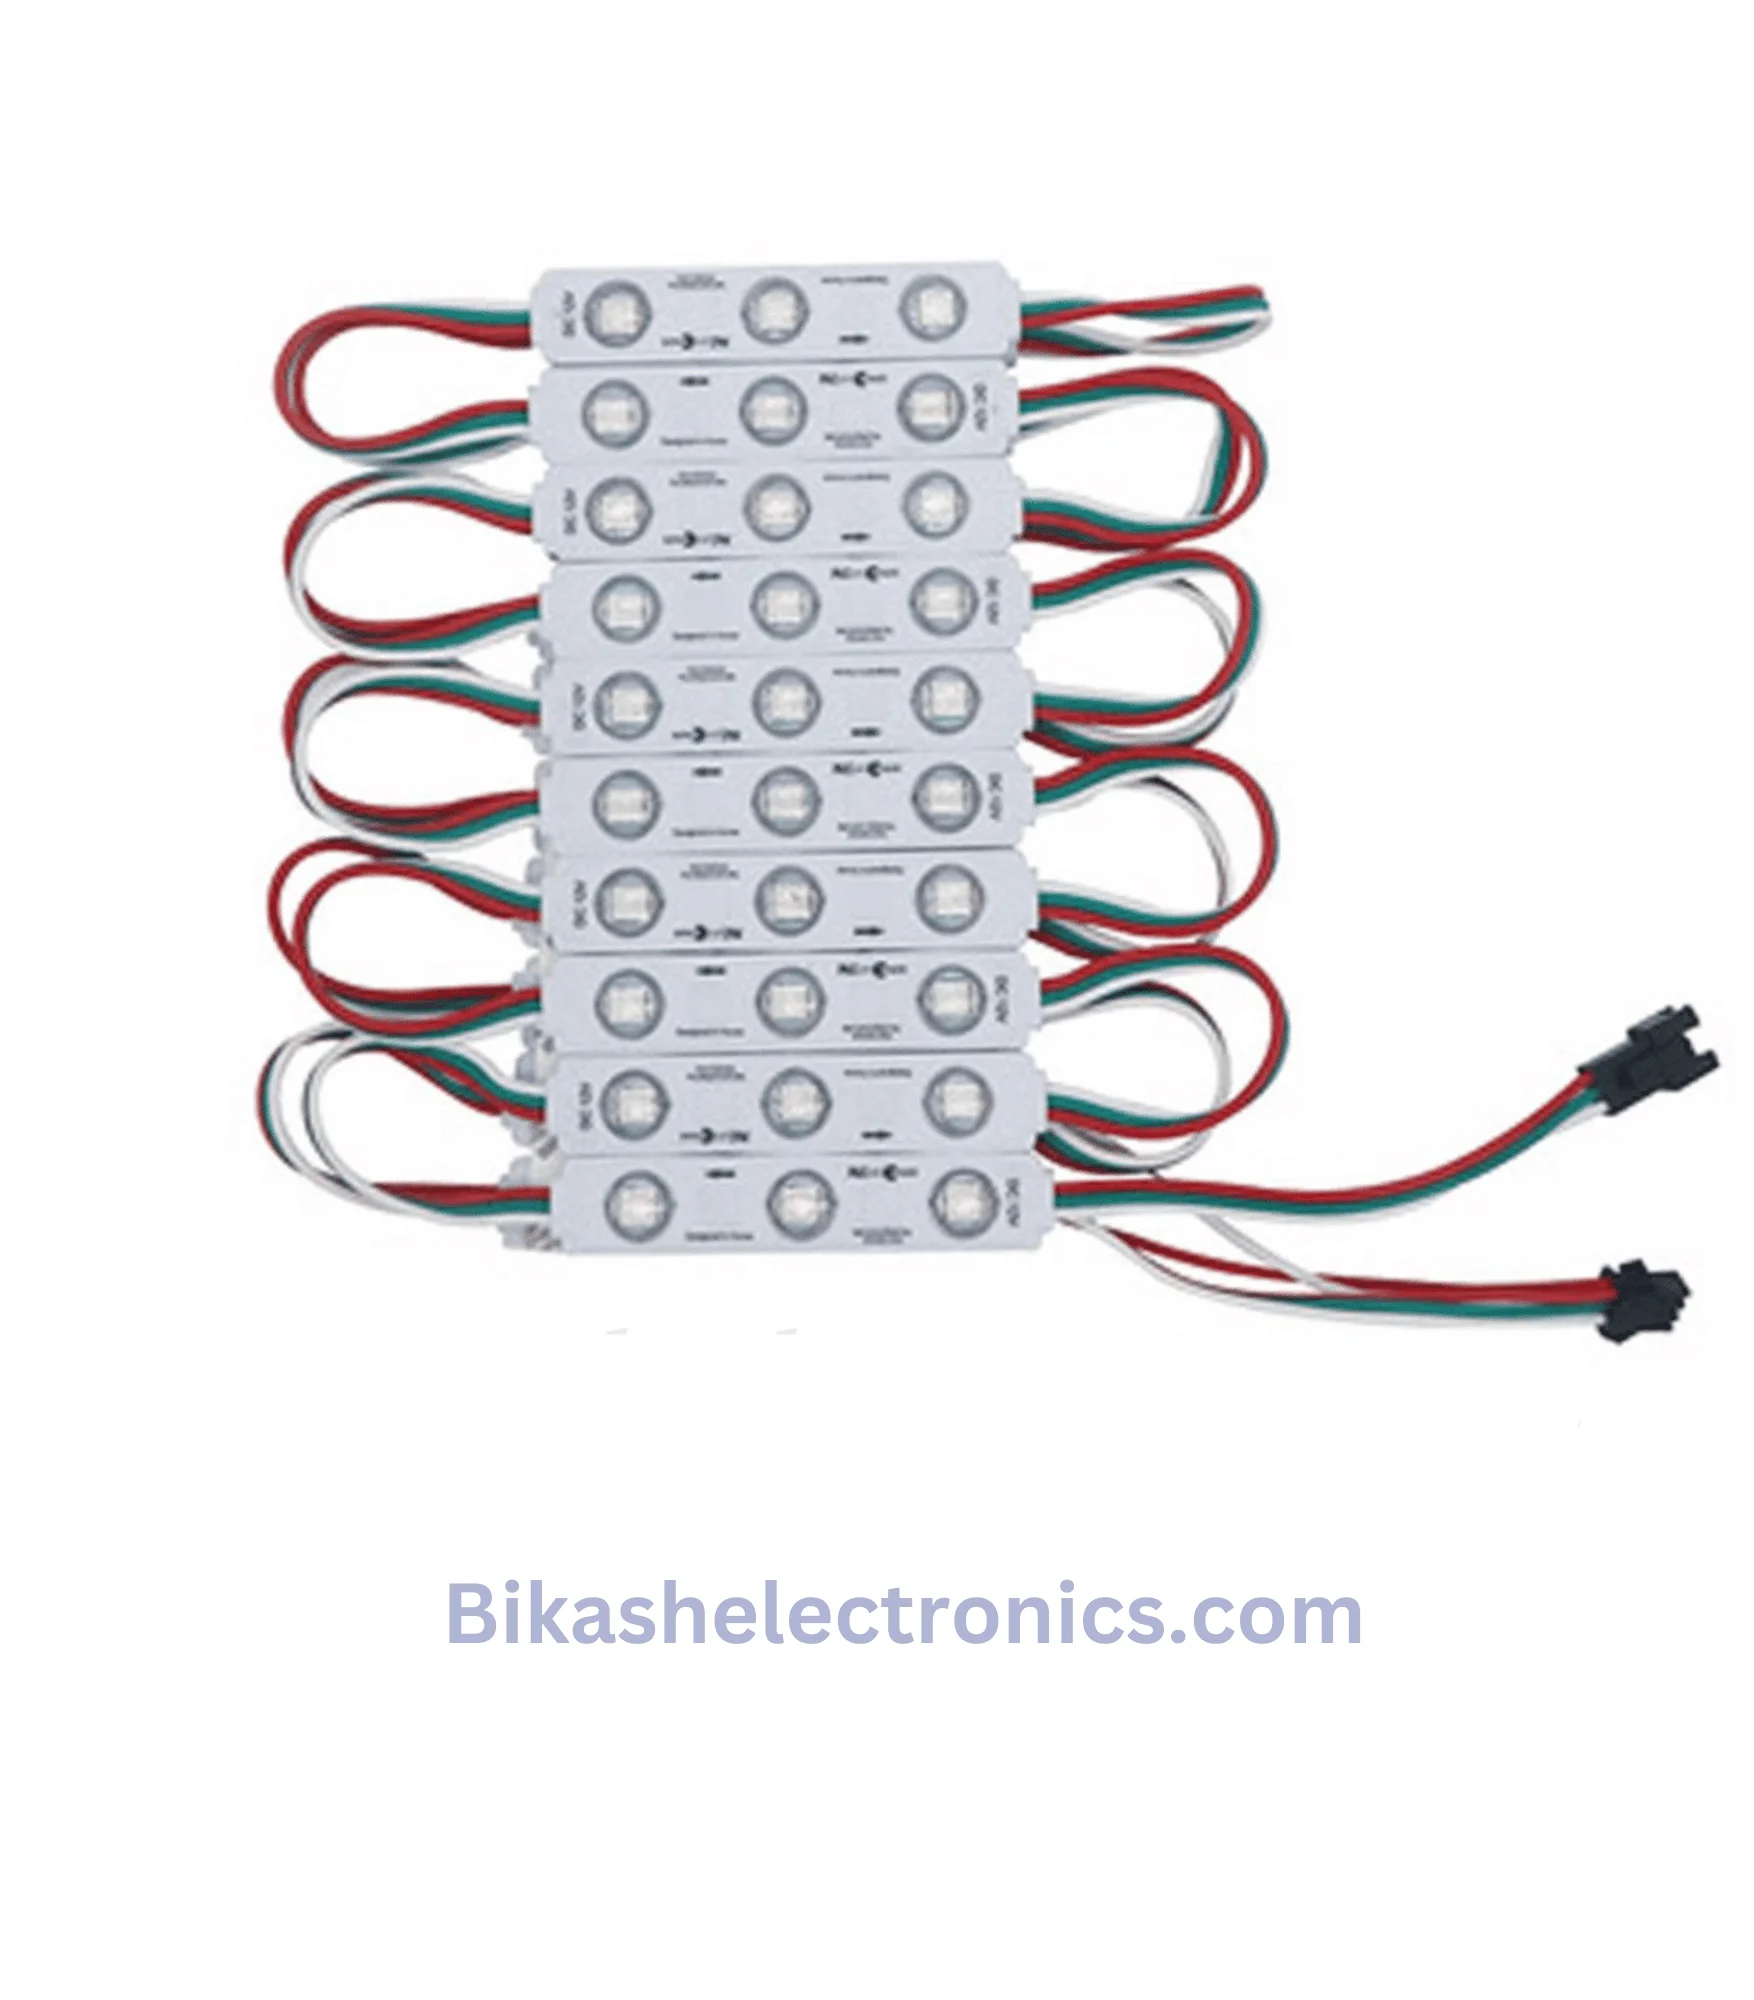 https://bikashelectronics.com/wp-content/uploads/2023/05/Pixel-led-WS2811-12-volt-RGB-led-module.webp